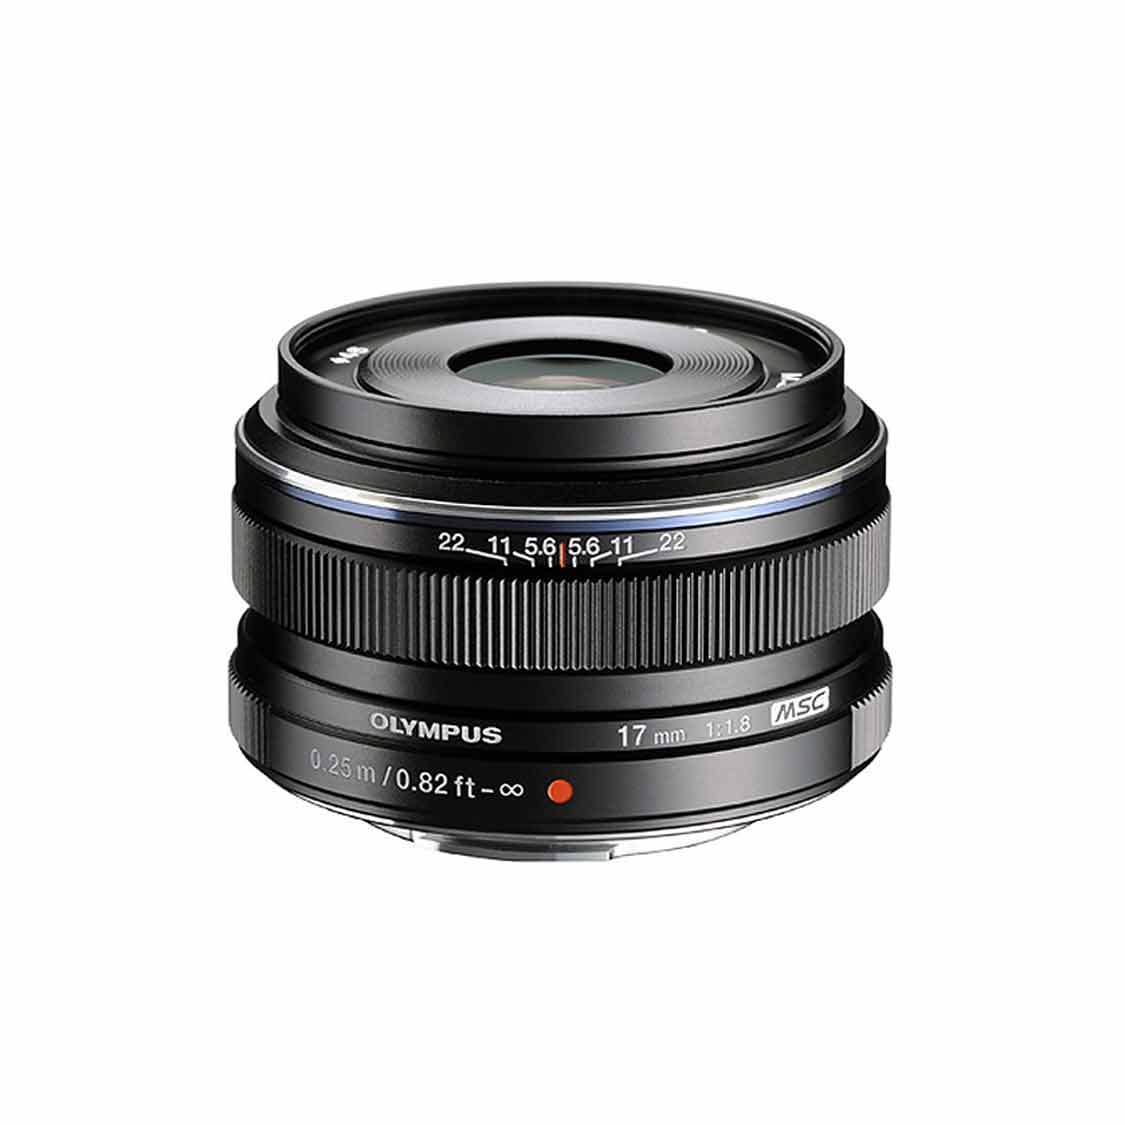 Olympus PEN MSC 17mm F1.8 Lens (black)